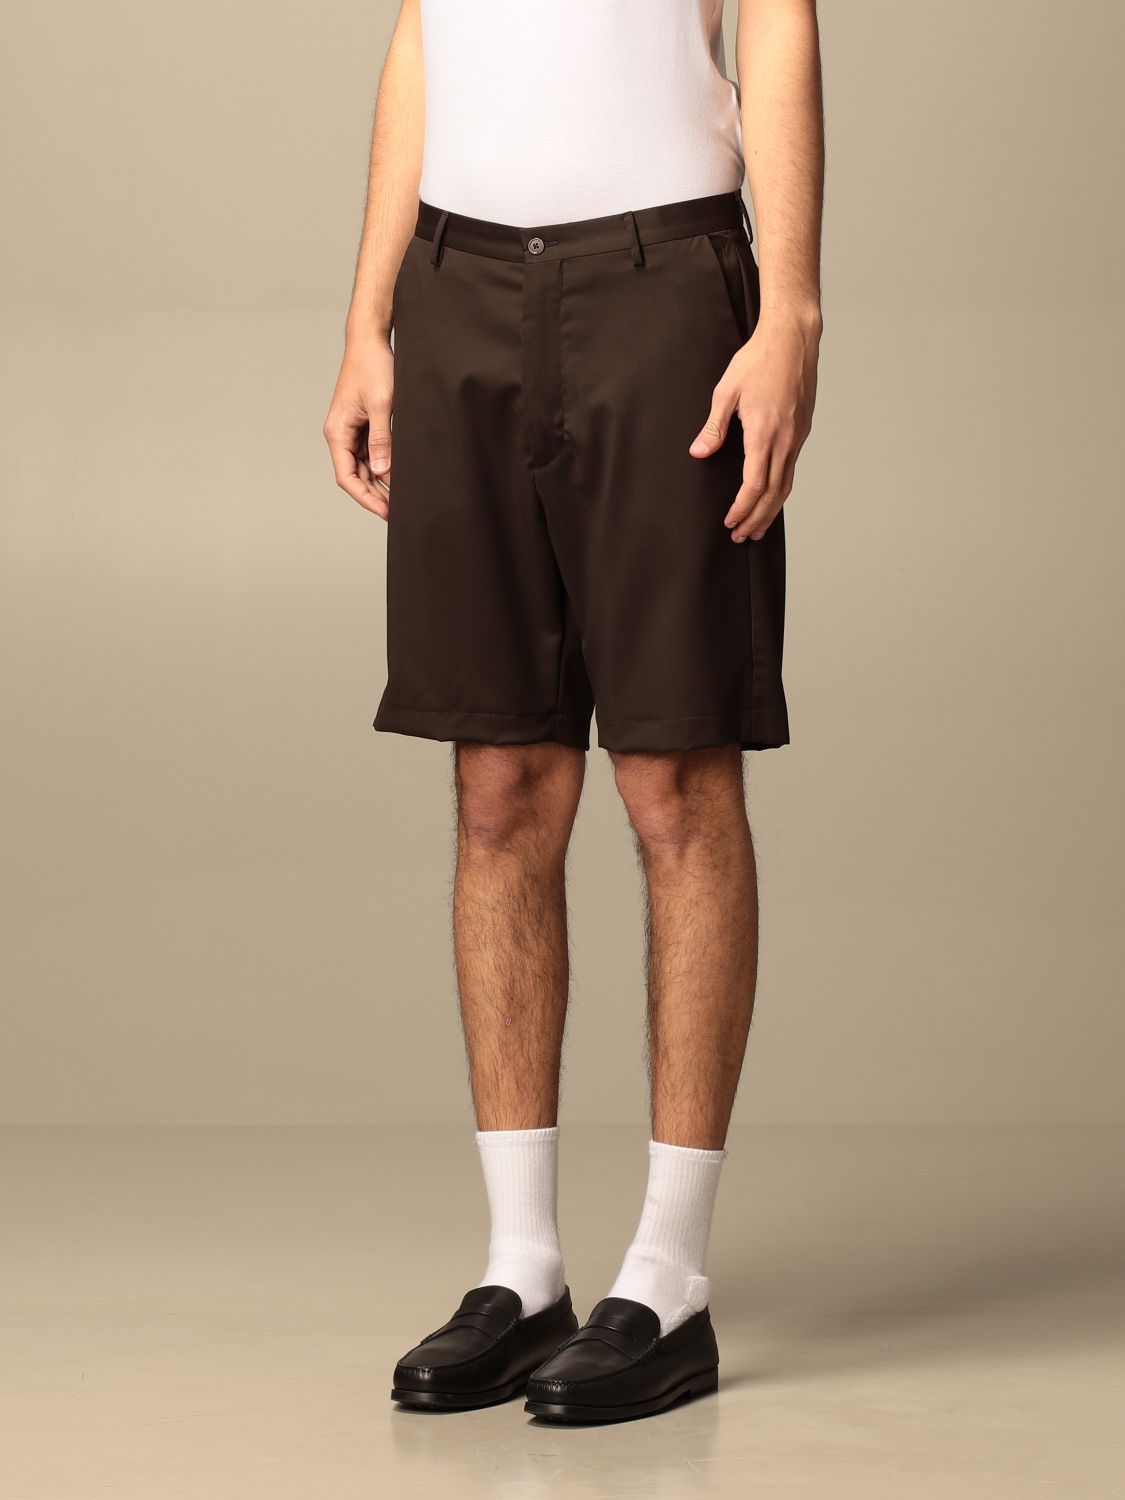 Pantalones cortos Paura: Pantalones cortos hombre Paura Di Danilo Paura marrón oscuro 3